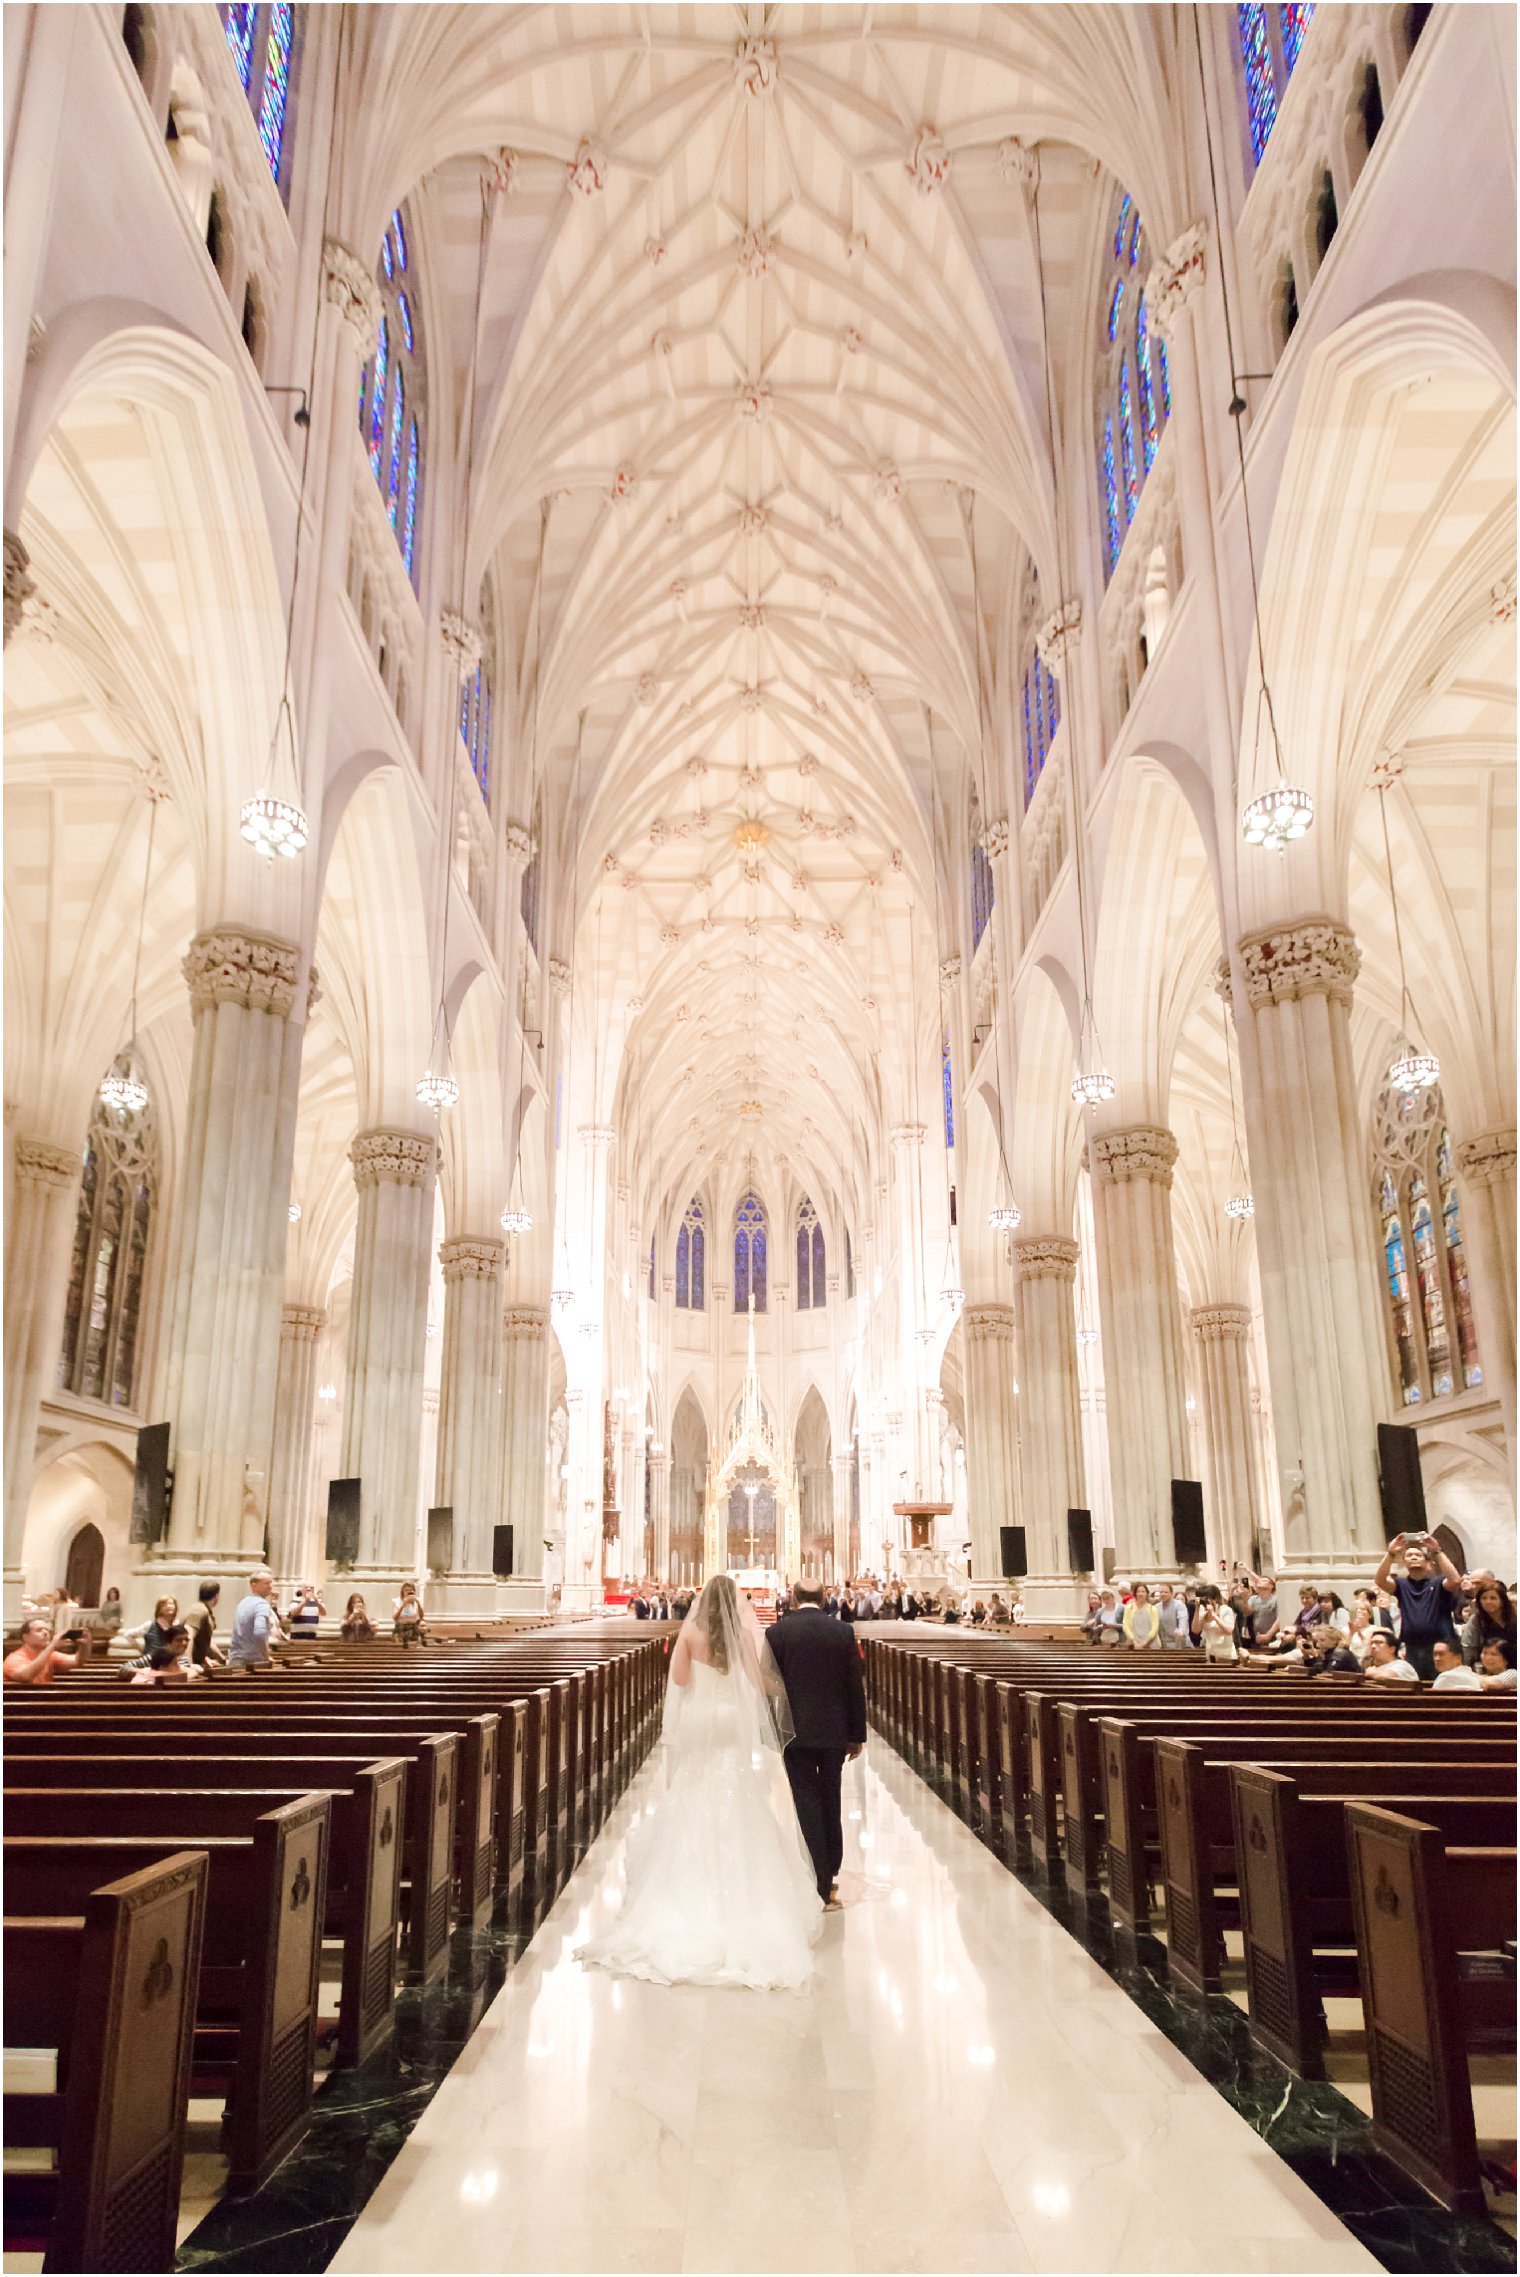 St. Patrick's Cathedral wedding photo of ceremony | Photo by Idalia Photography